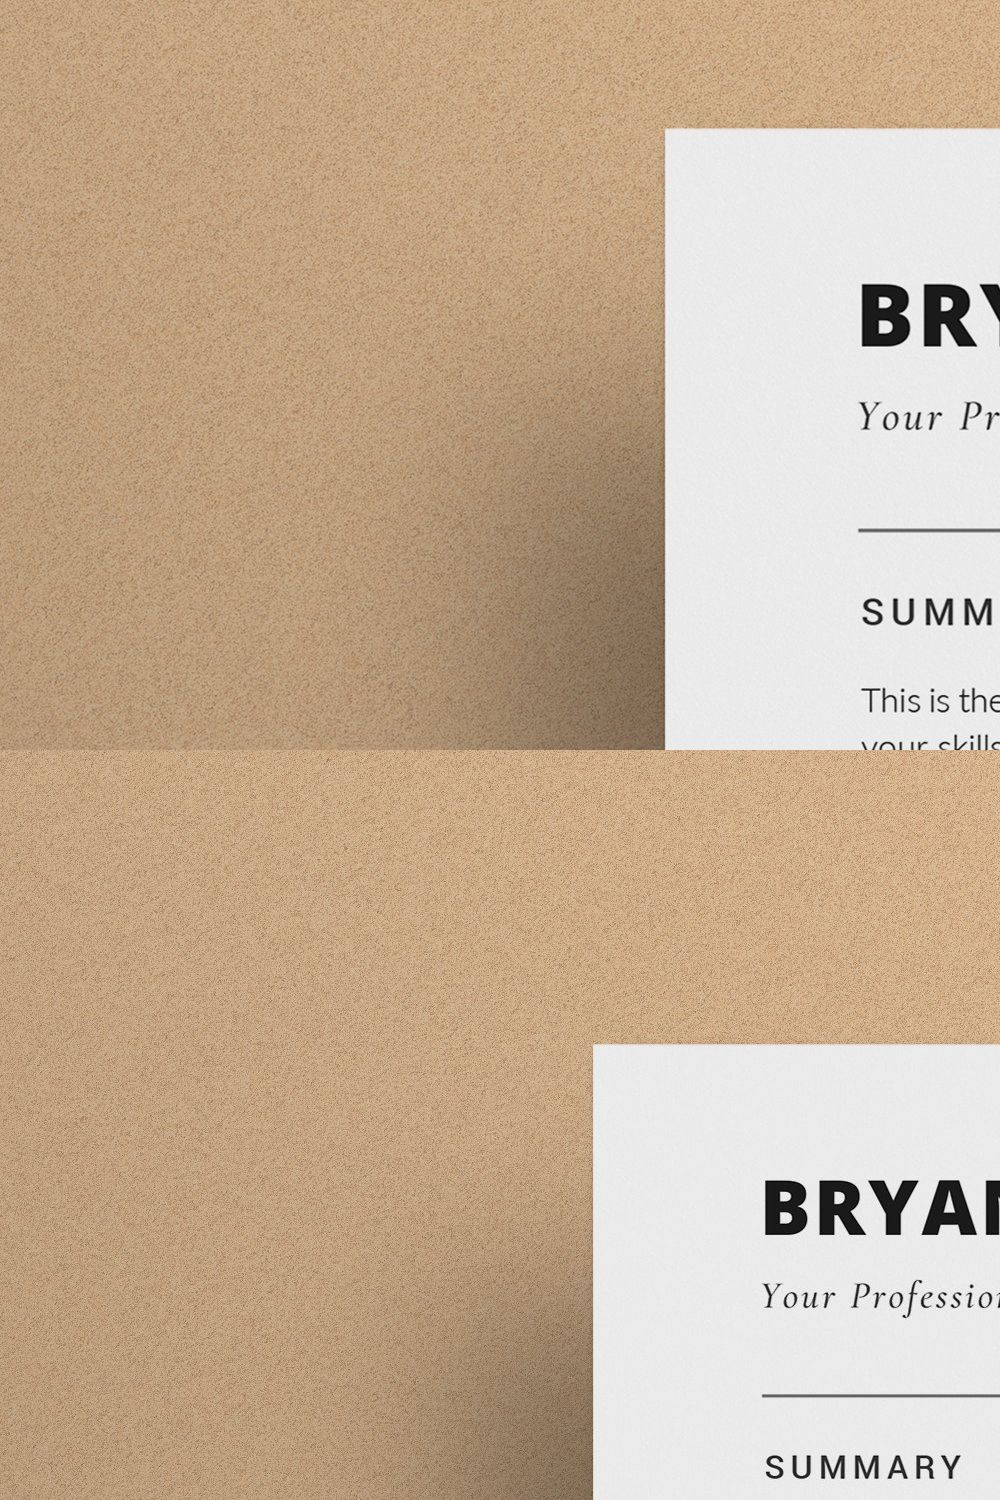 Resume/CV - The Bryan pinterest preview image.